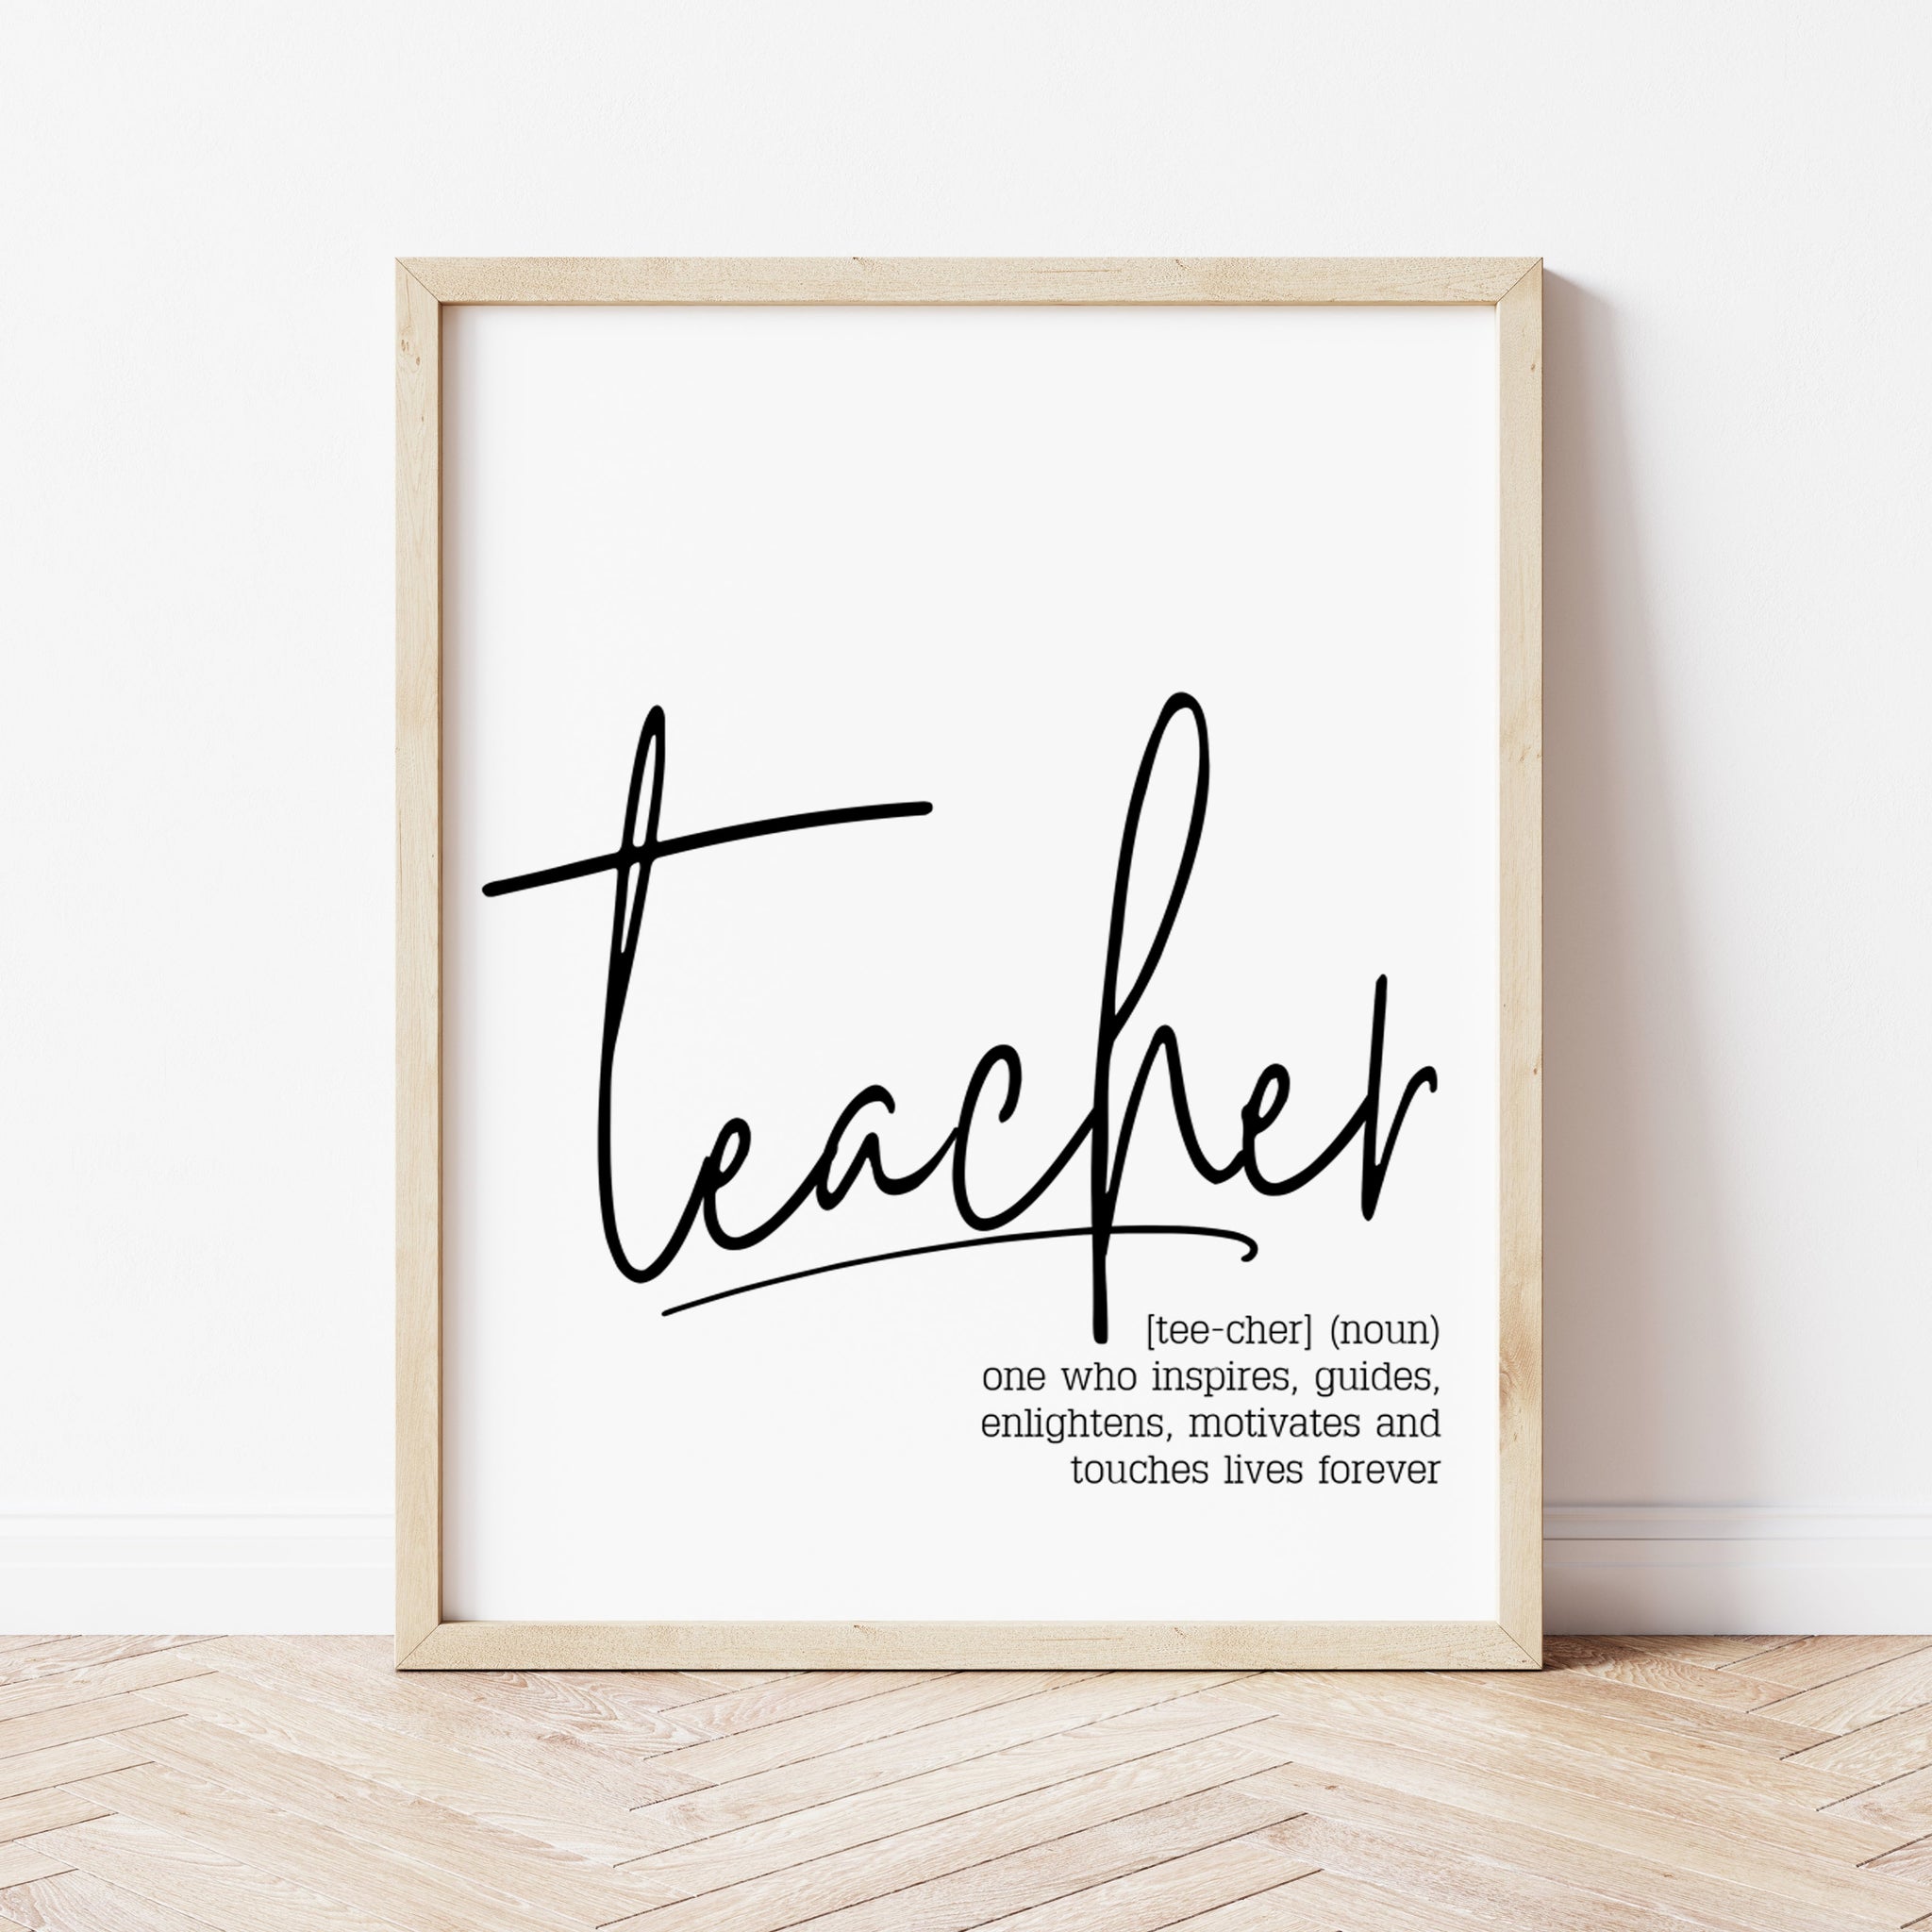 Teacher Thank You Gift Ideas | Teacher Definition Print | Ollie + Hank